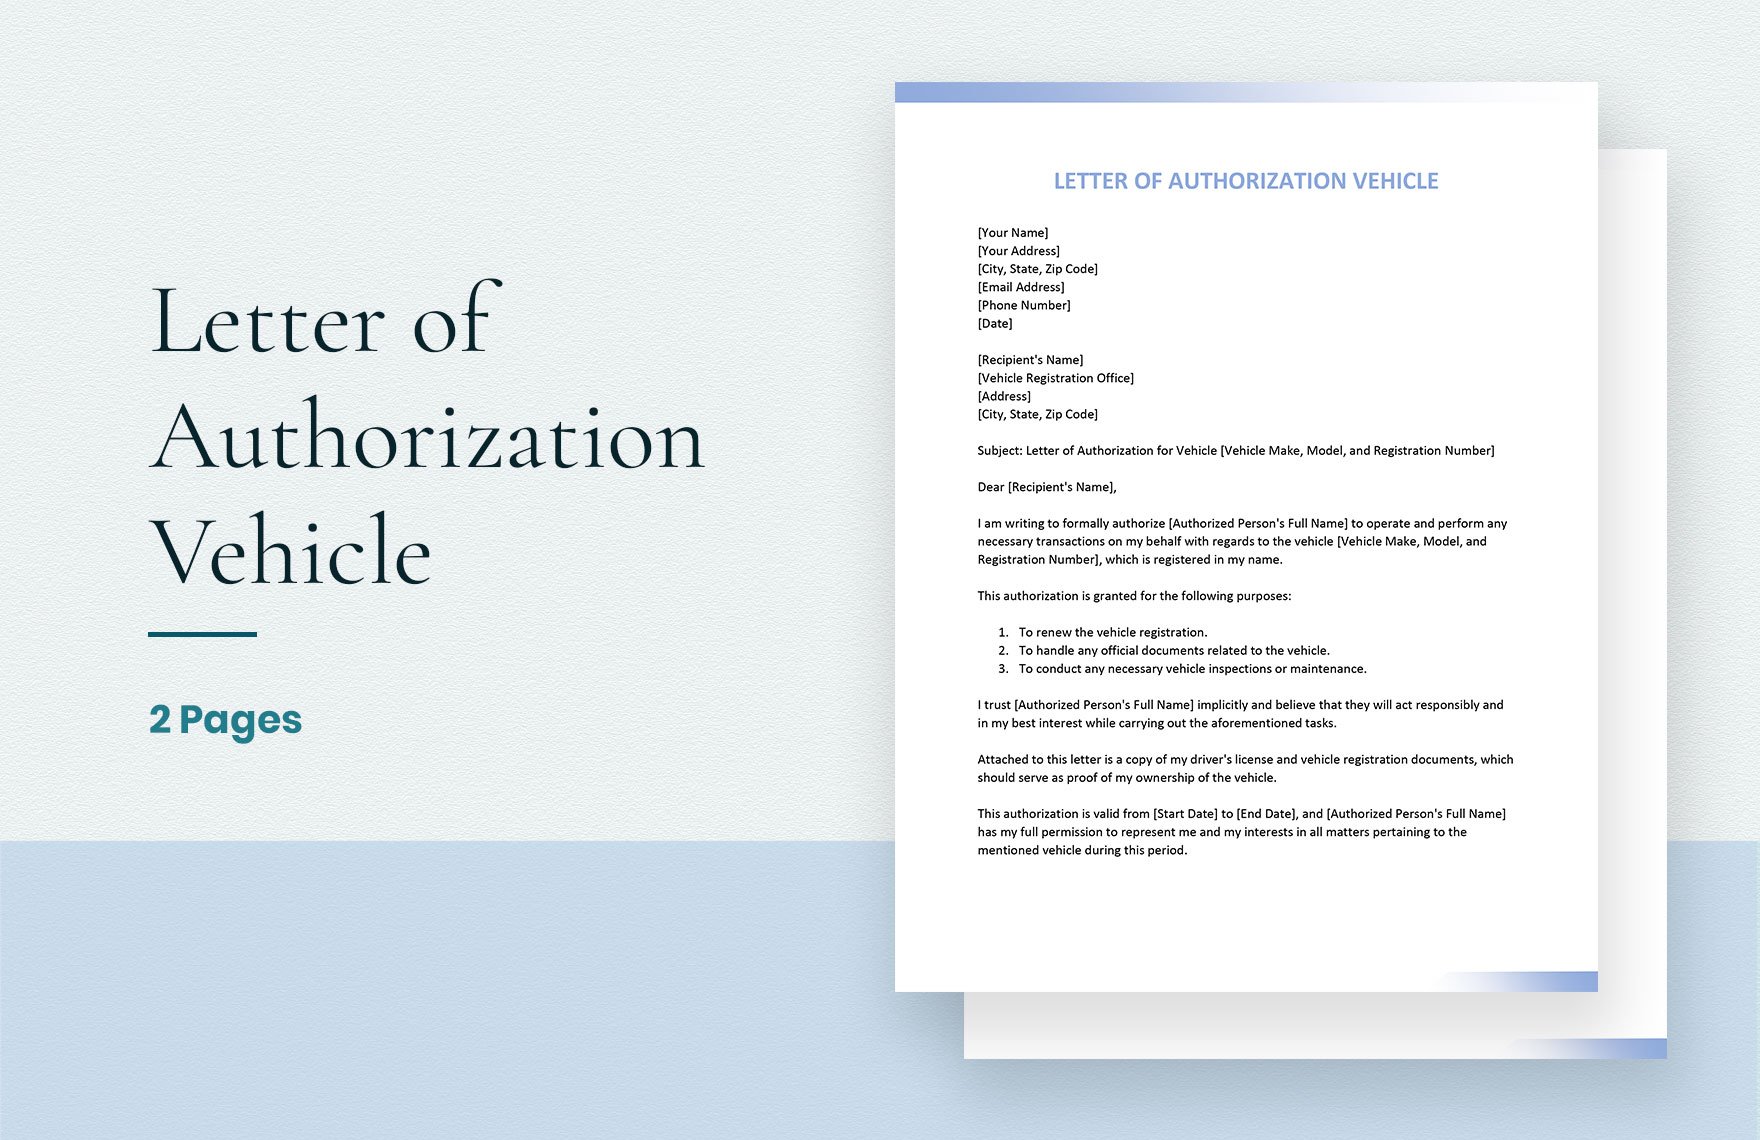 Letter of Authorization Vehicle